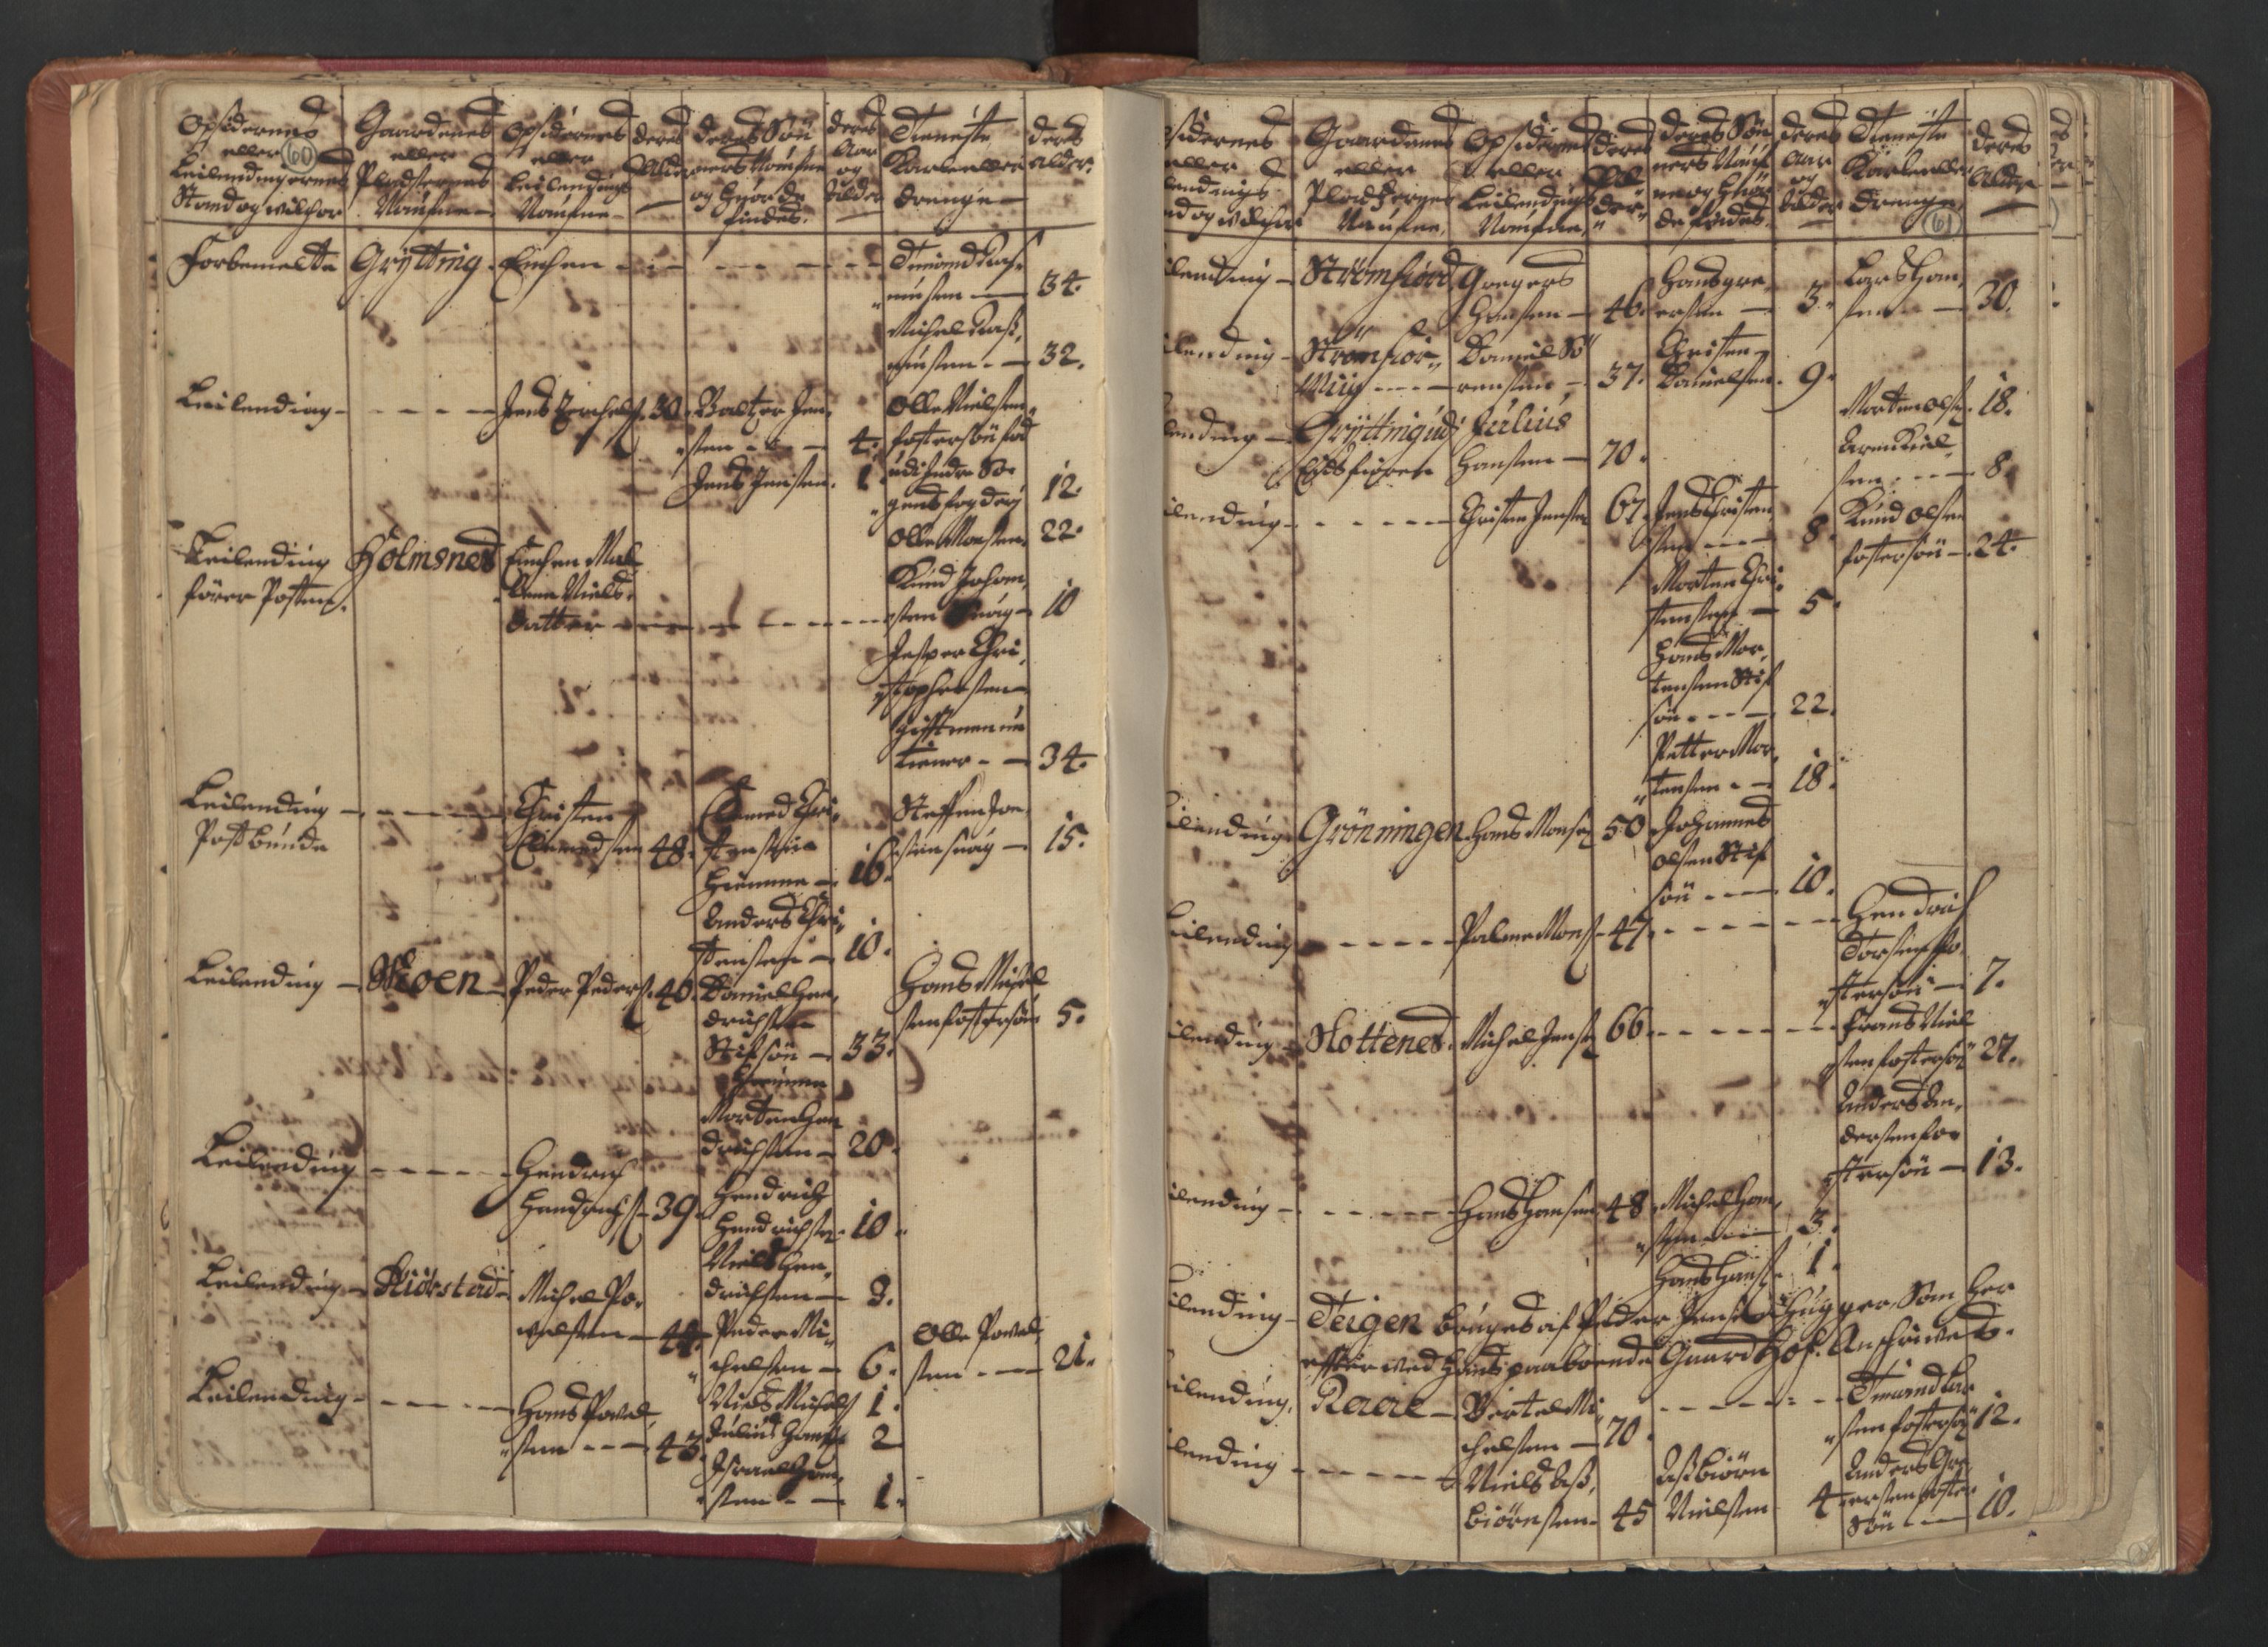 RA, Manntallet 1701, nr. 18: Vesterålen, Andenes og Lofoten fogderi, 1701, s. 60-61